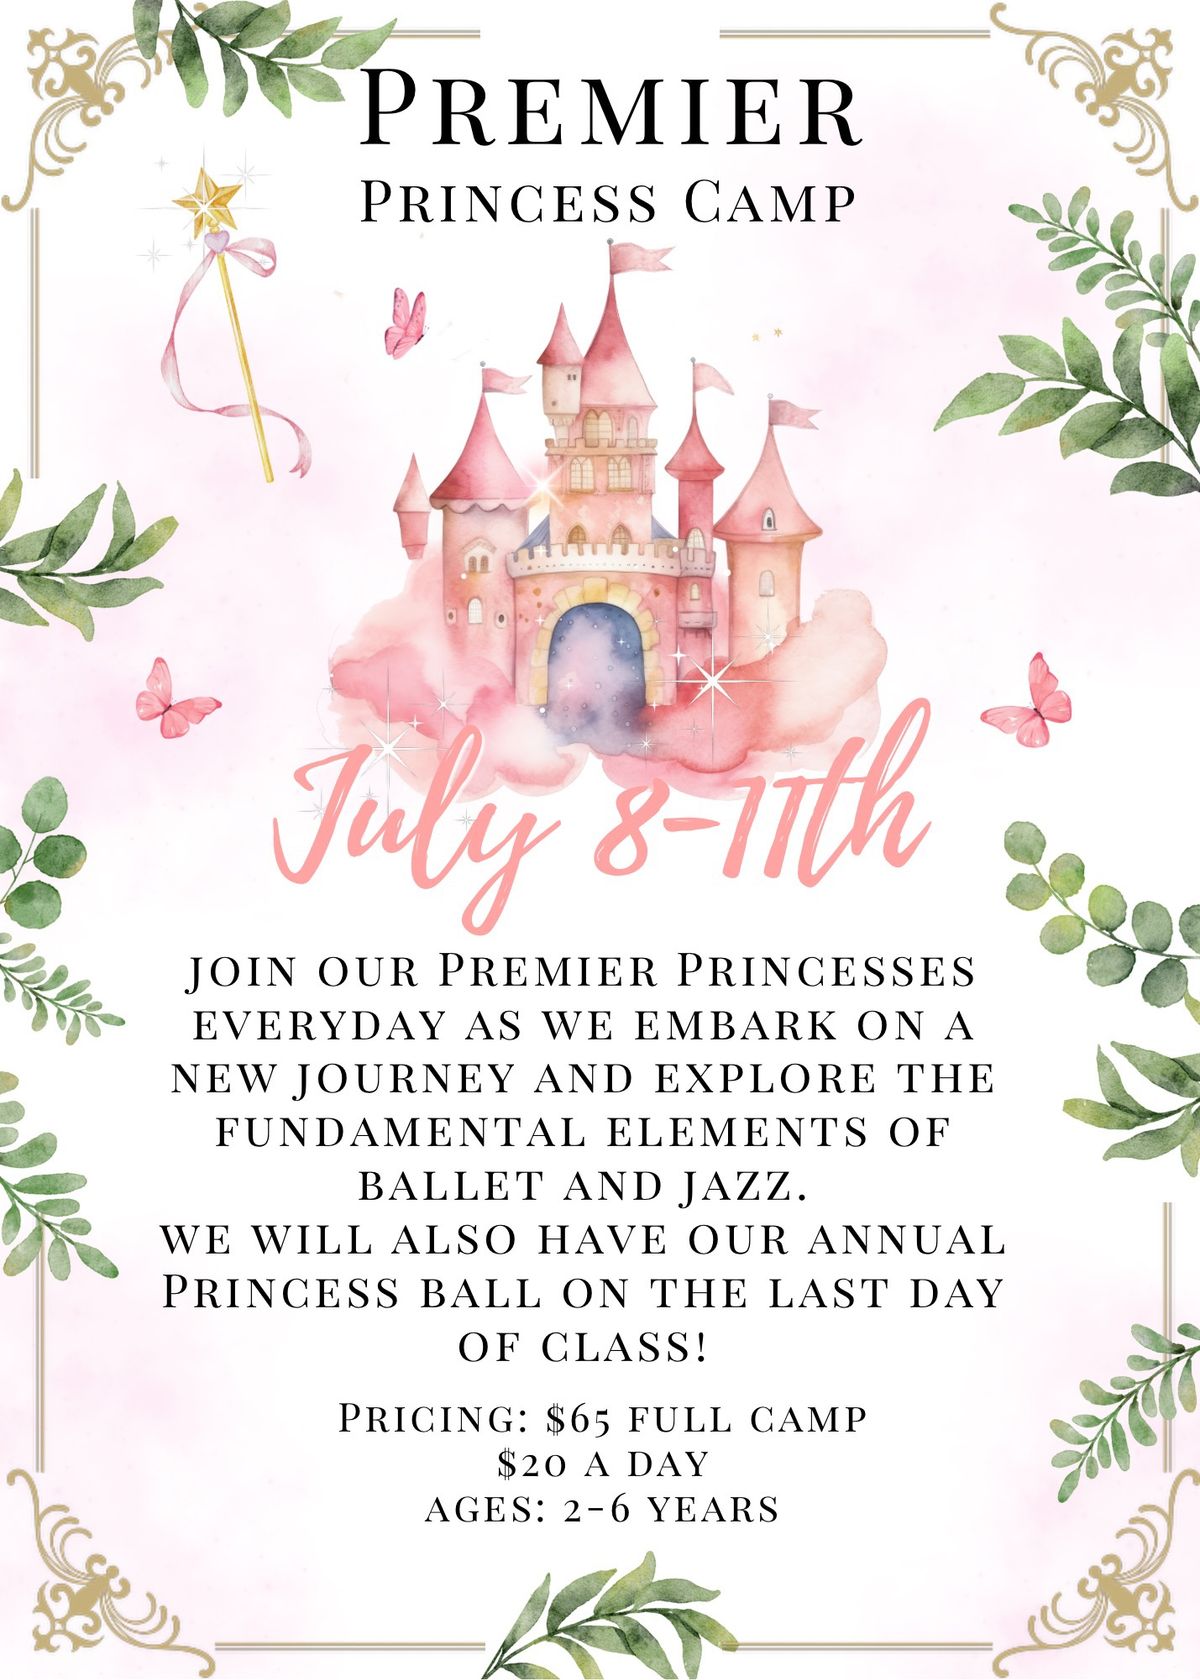 Premier Princess Camp